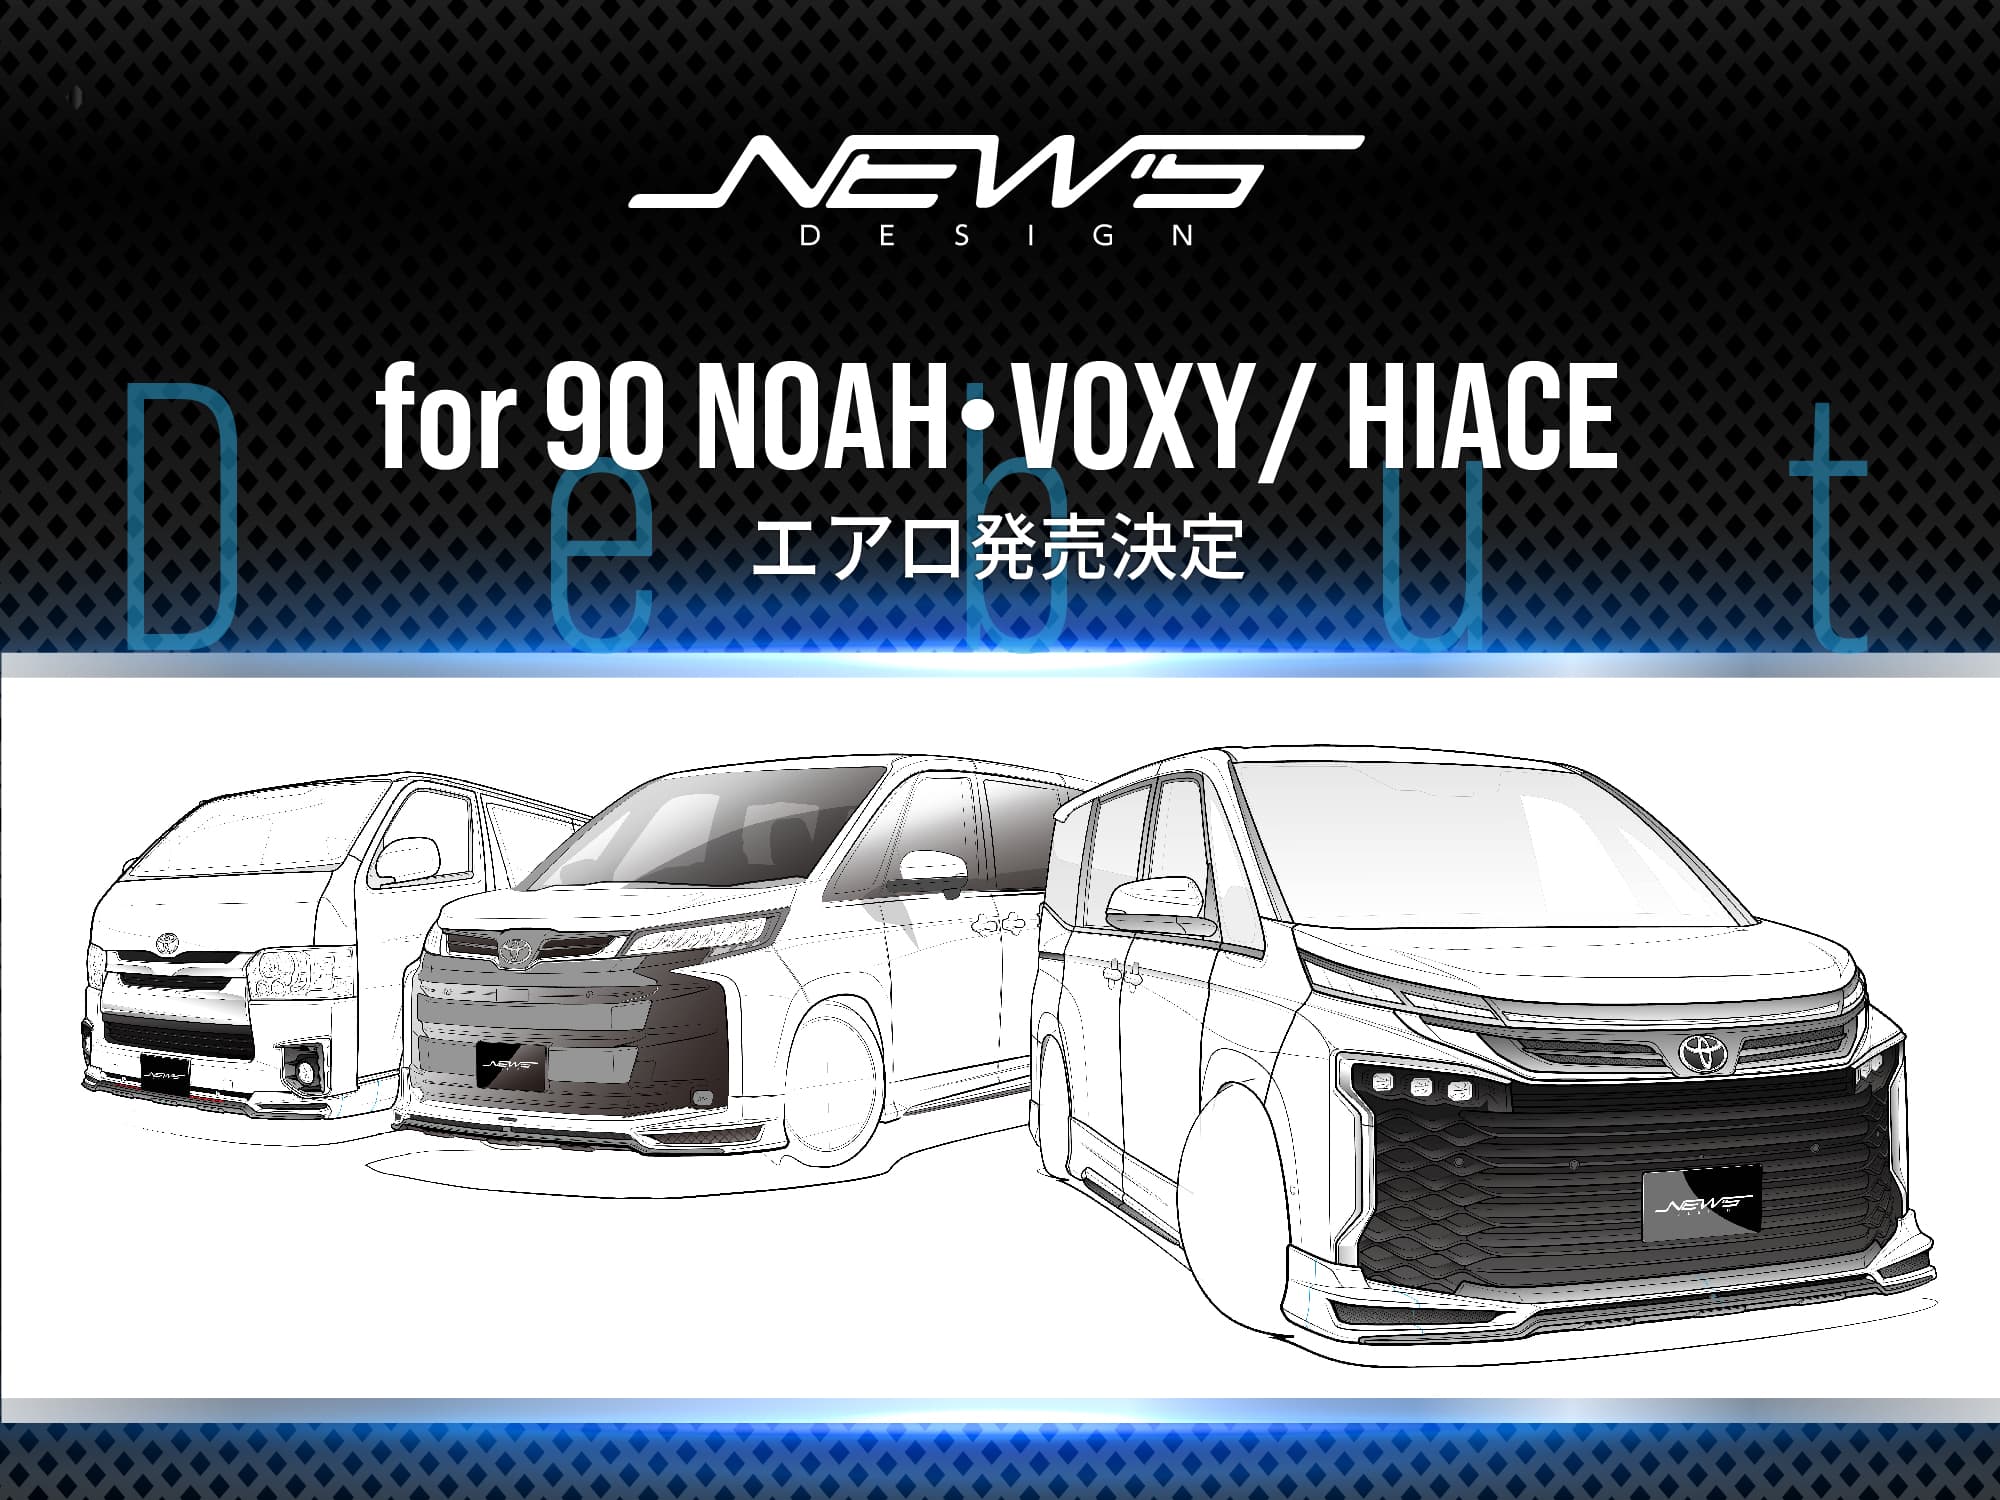 newsdesign for 90 NOAH・VOXY/HIACE エアロ発売決定